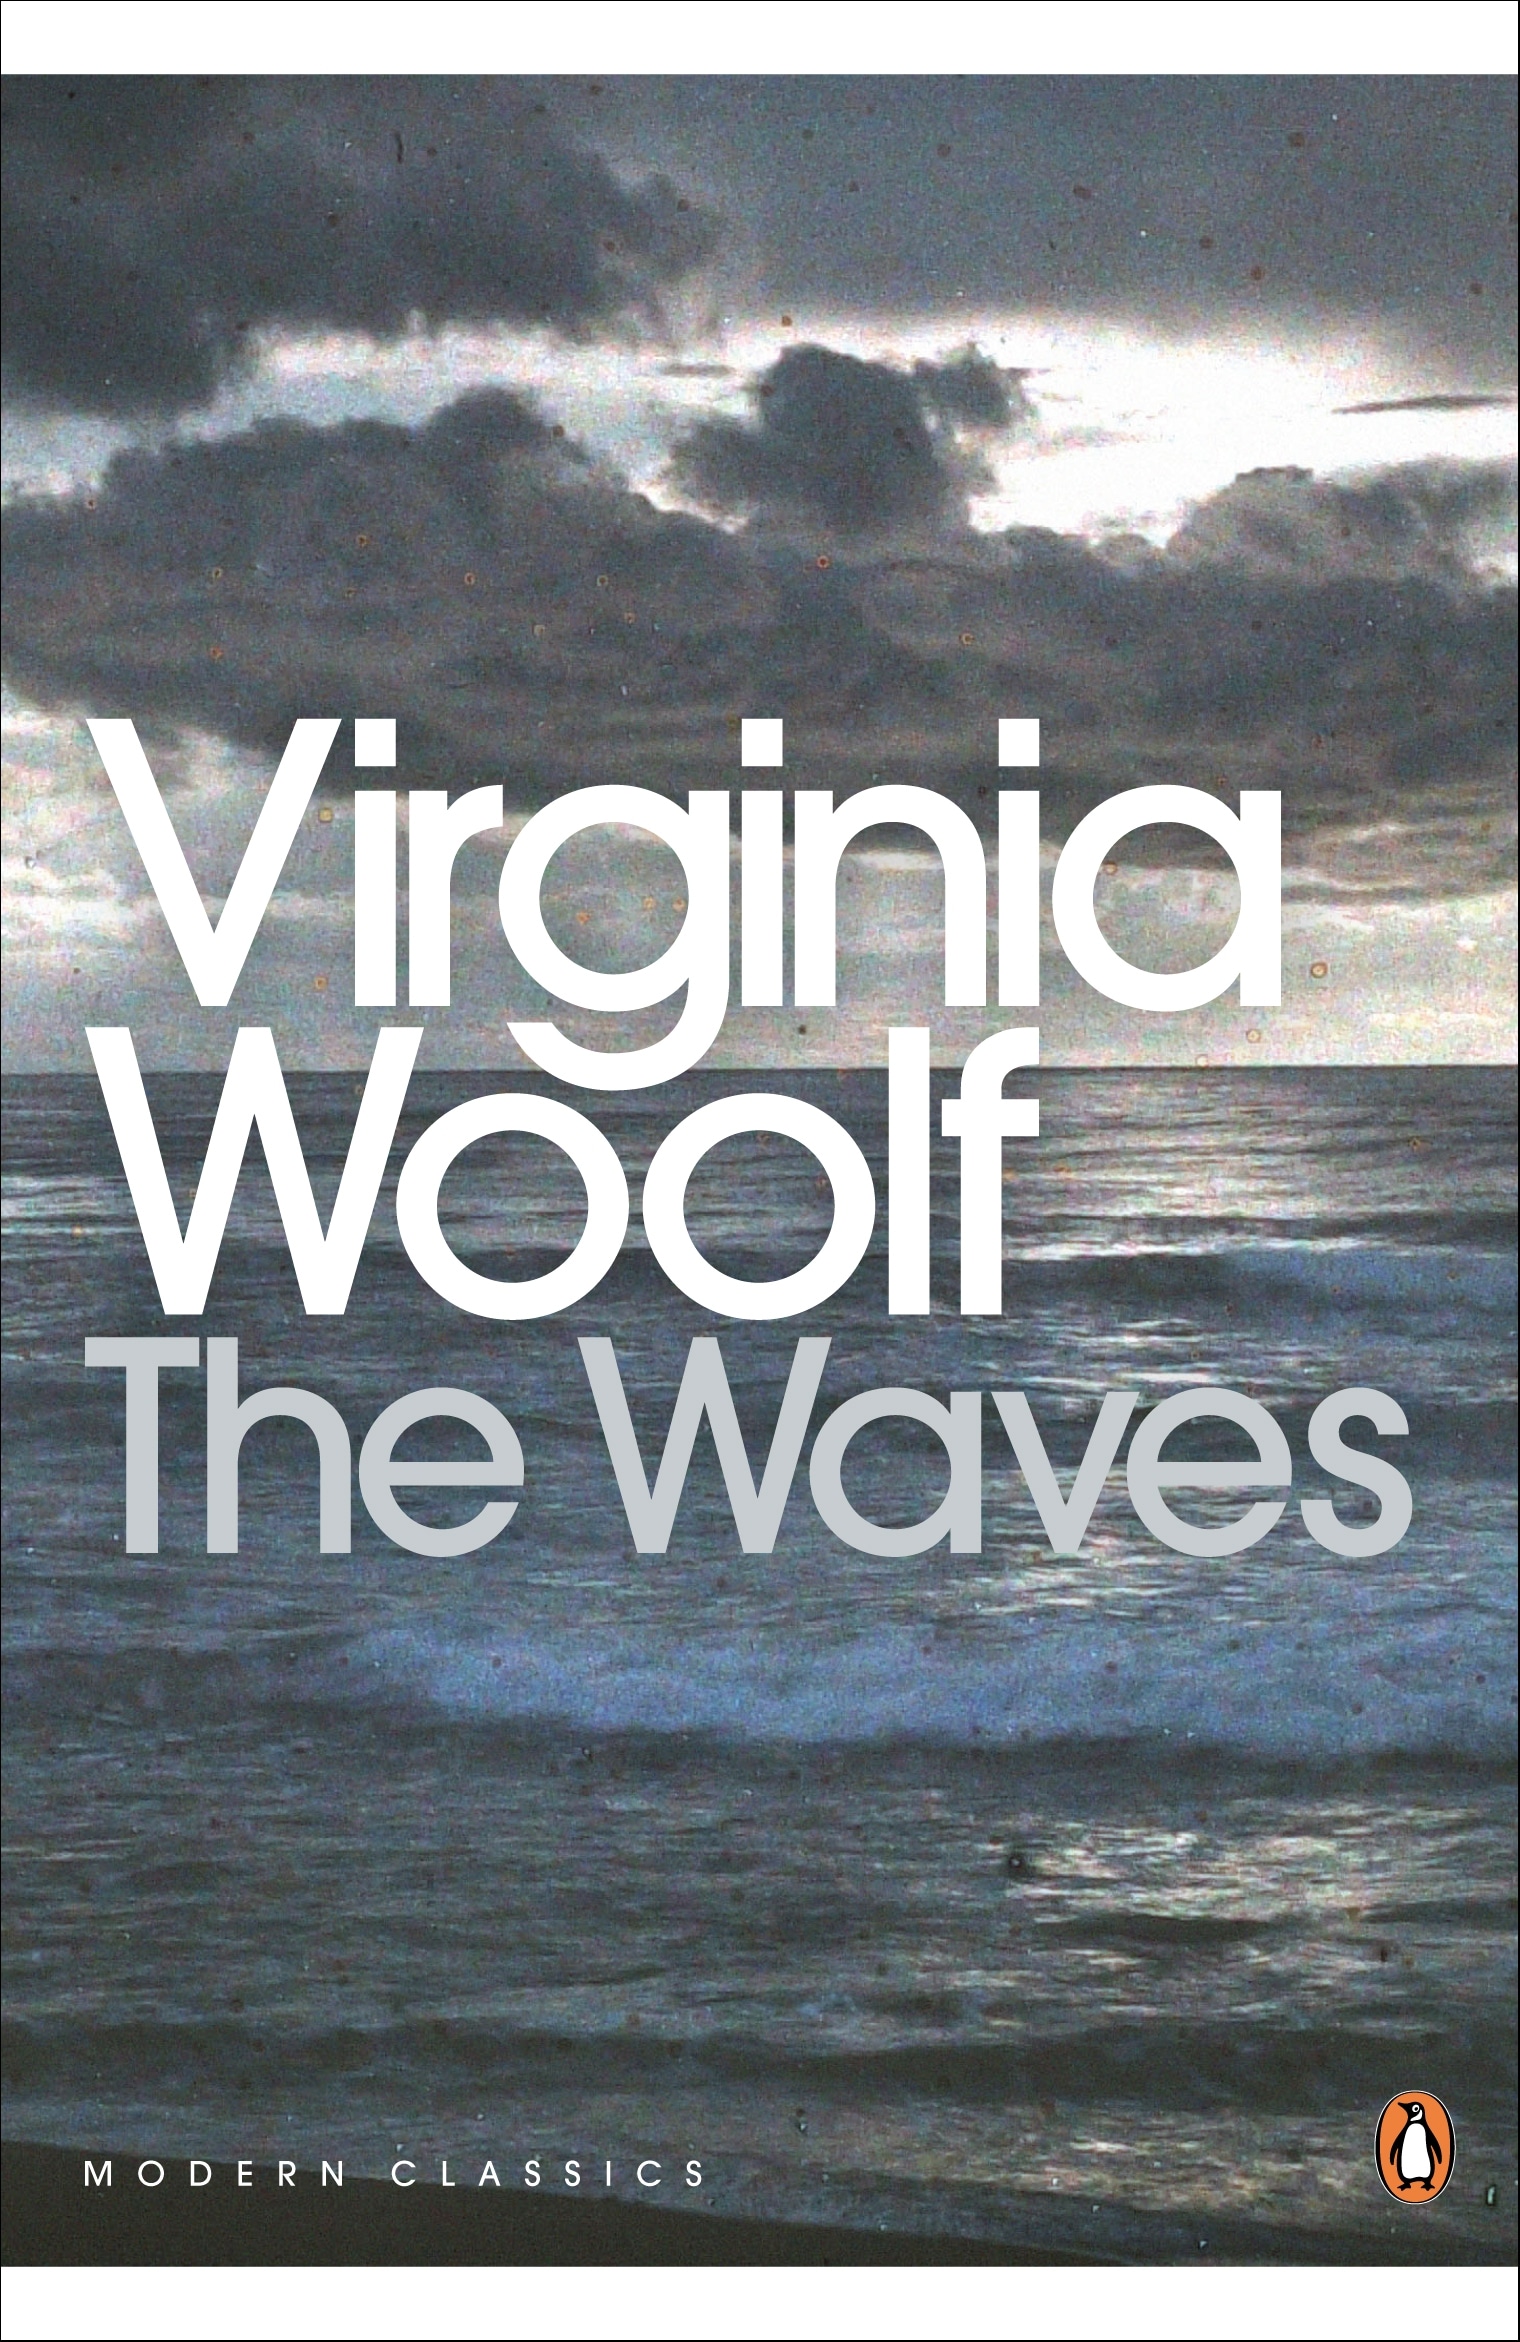 Book “The Waves” by Virginia Woolf, Kate Flint — February 3, 2000